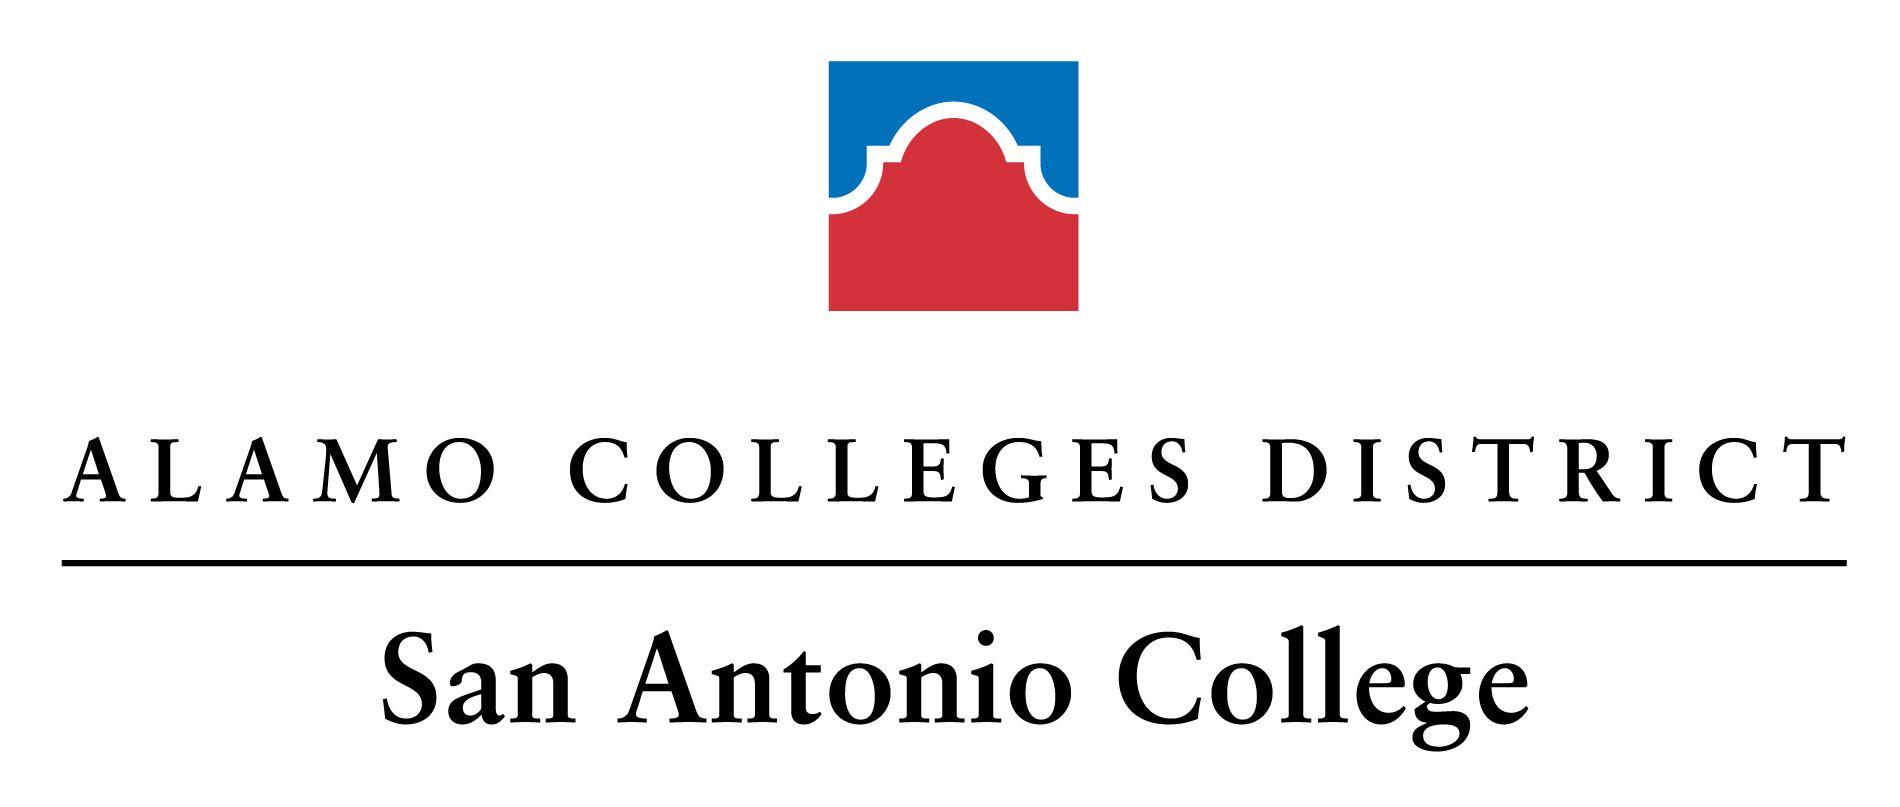 Antonio Logo - SAC : News and Events : Media : Logos | Alamo Colleges